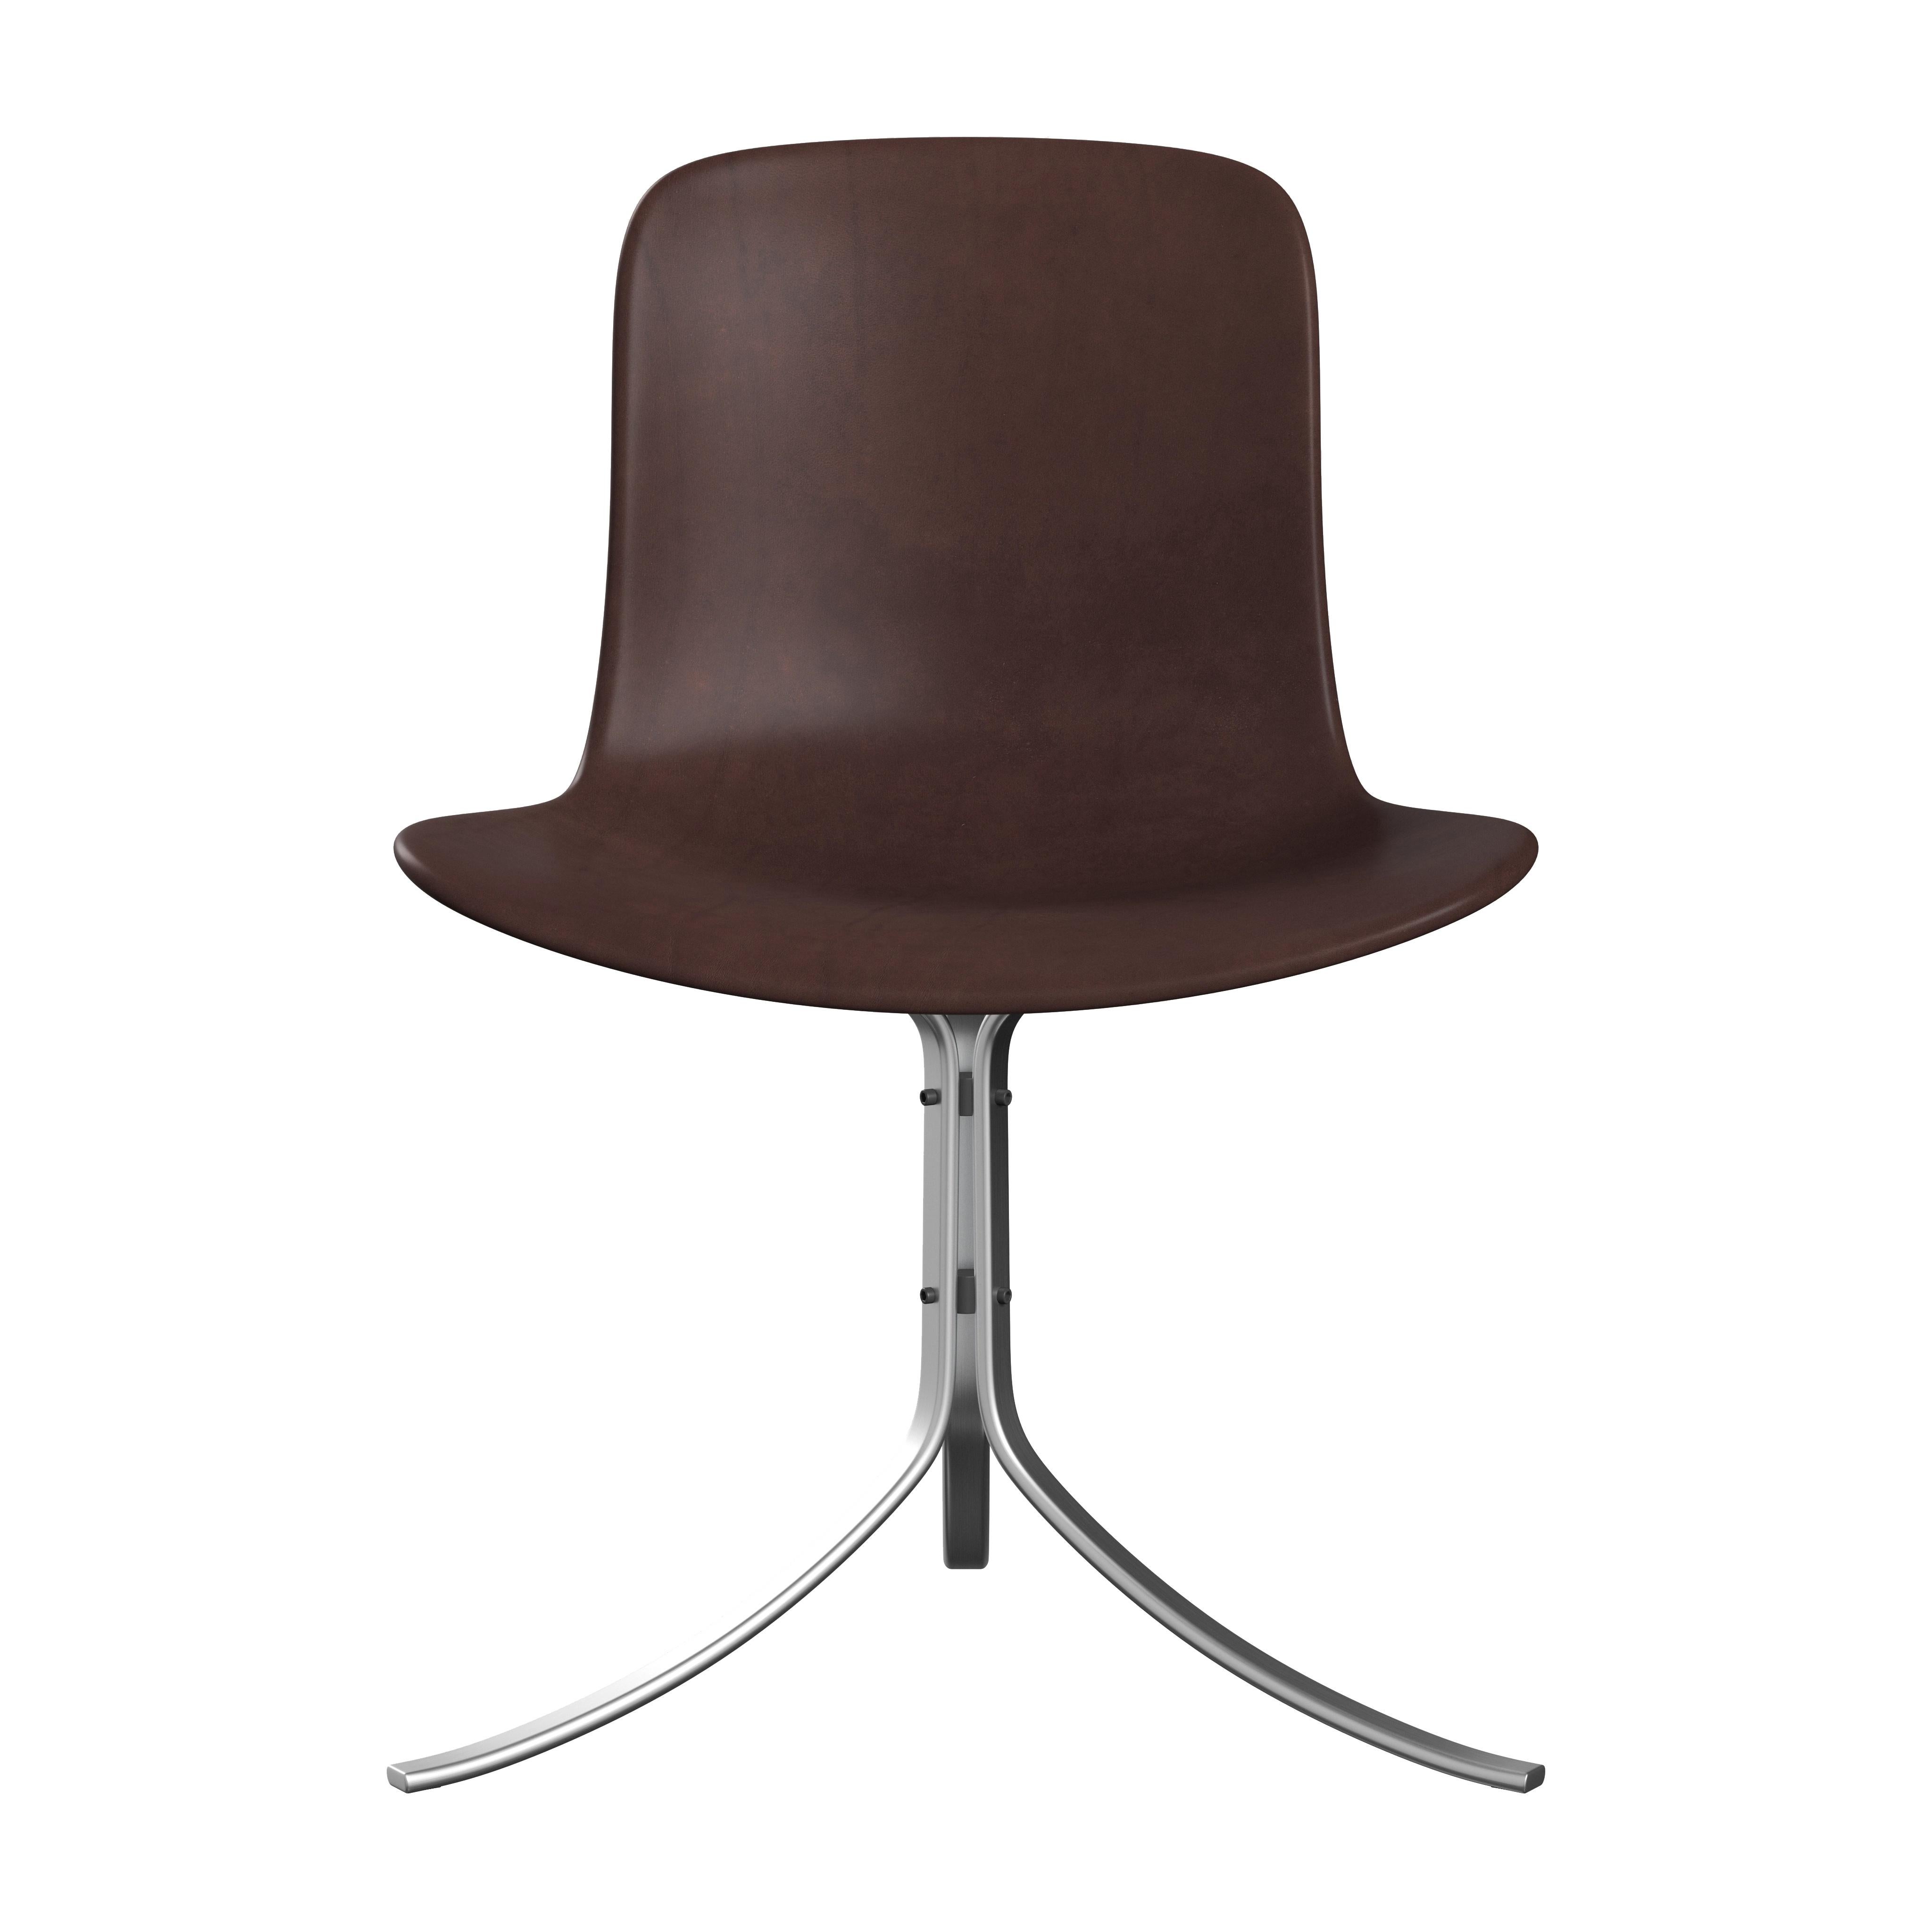 Poul Kjærholm 'PK9' Dining Chair for Fritz Hansen in Aura Leather For Sale 4